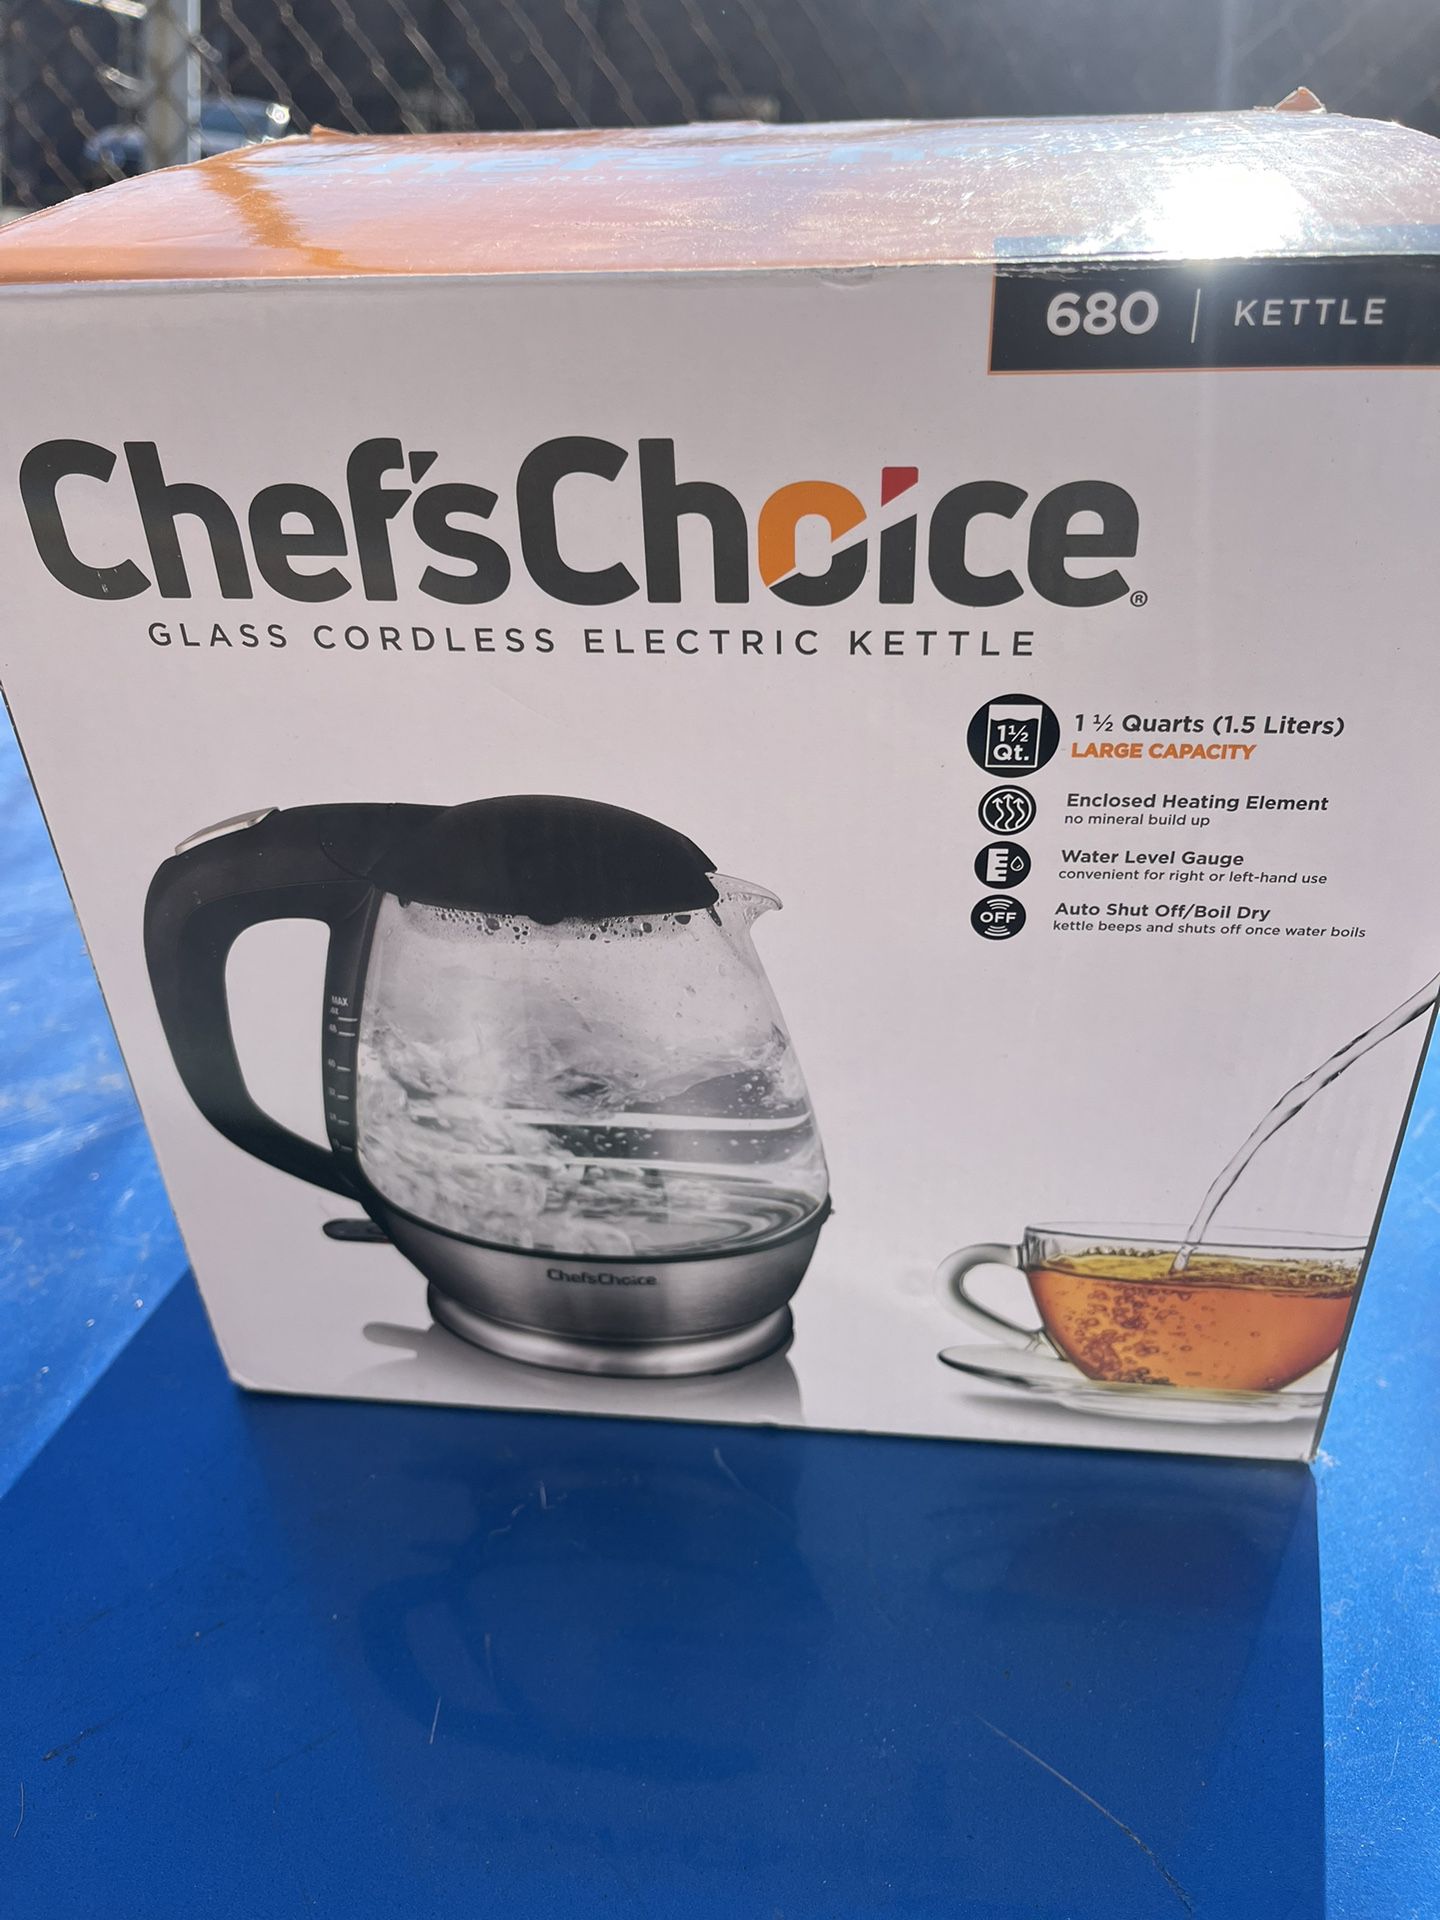 Chef’s Choice 680 Kettle 